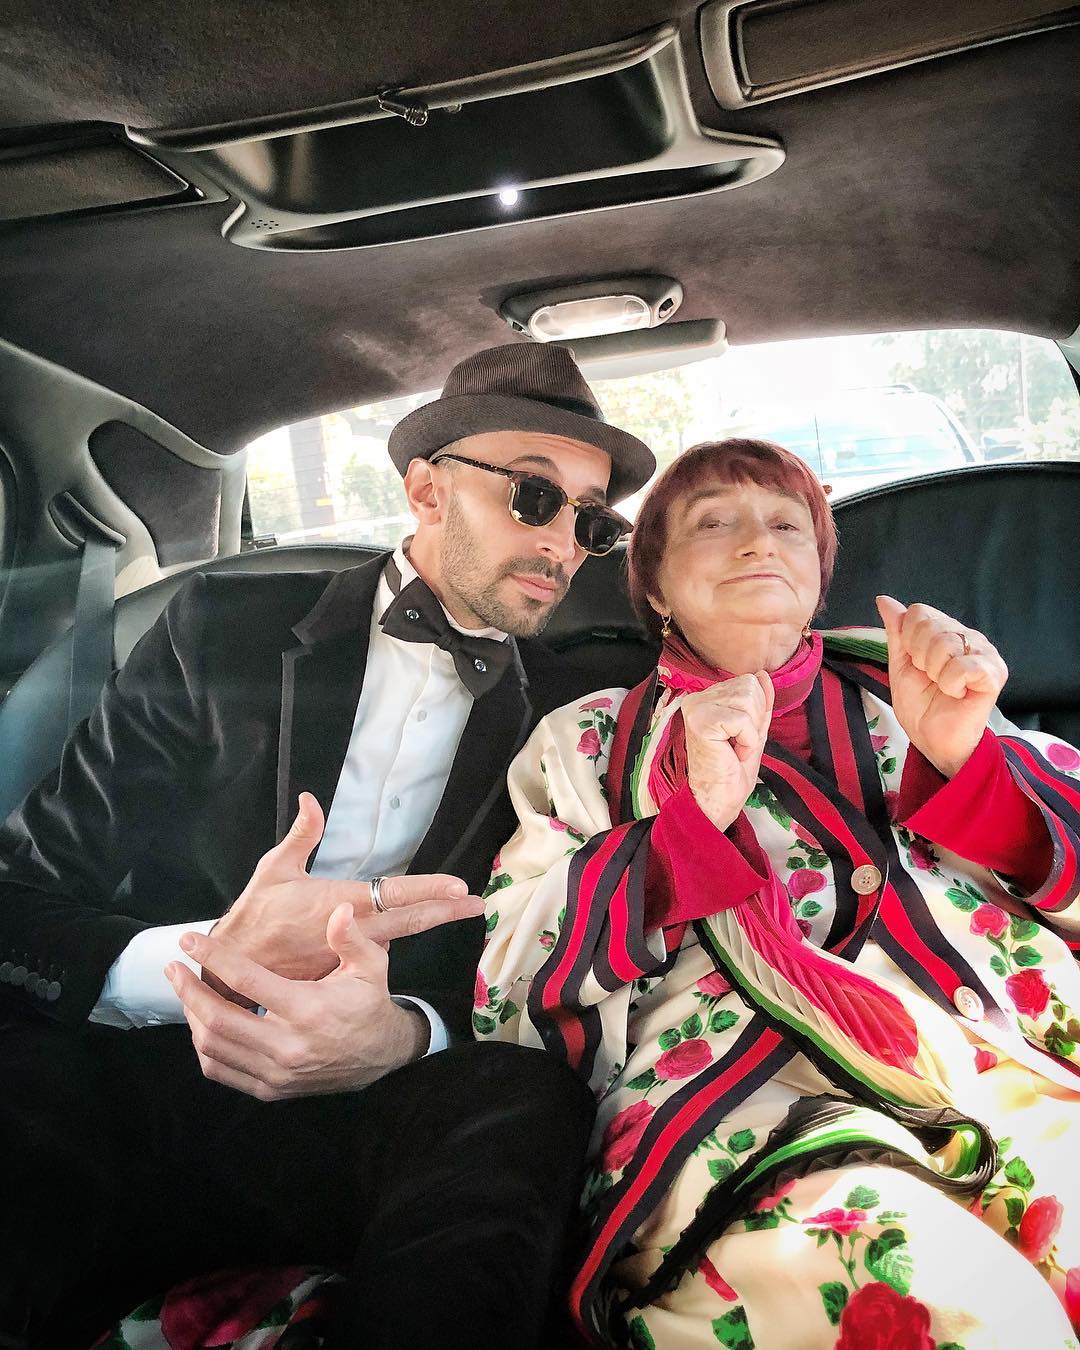 JR and Agnès Varda Varda en-route to the Oscars